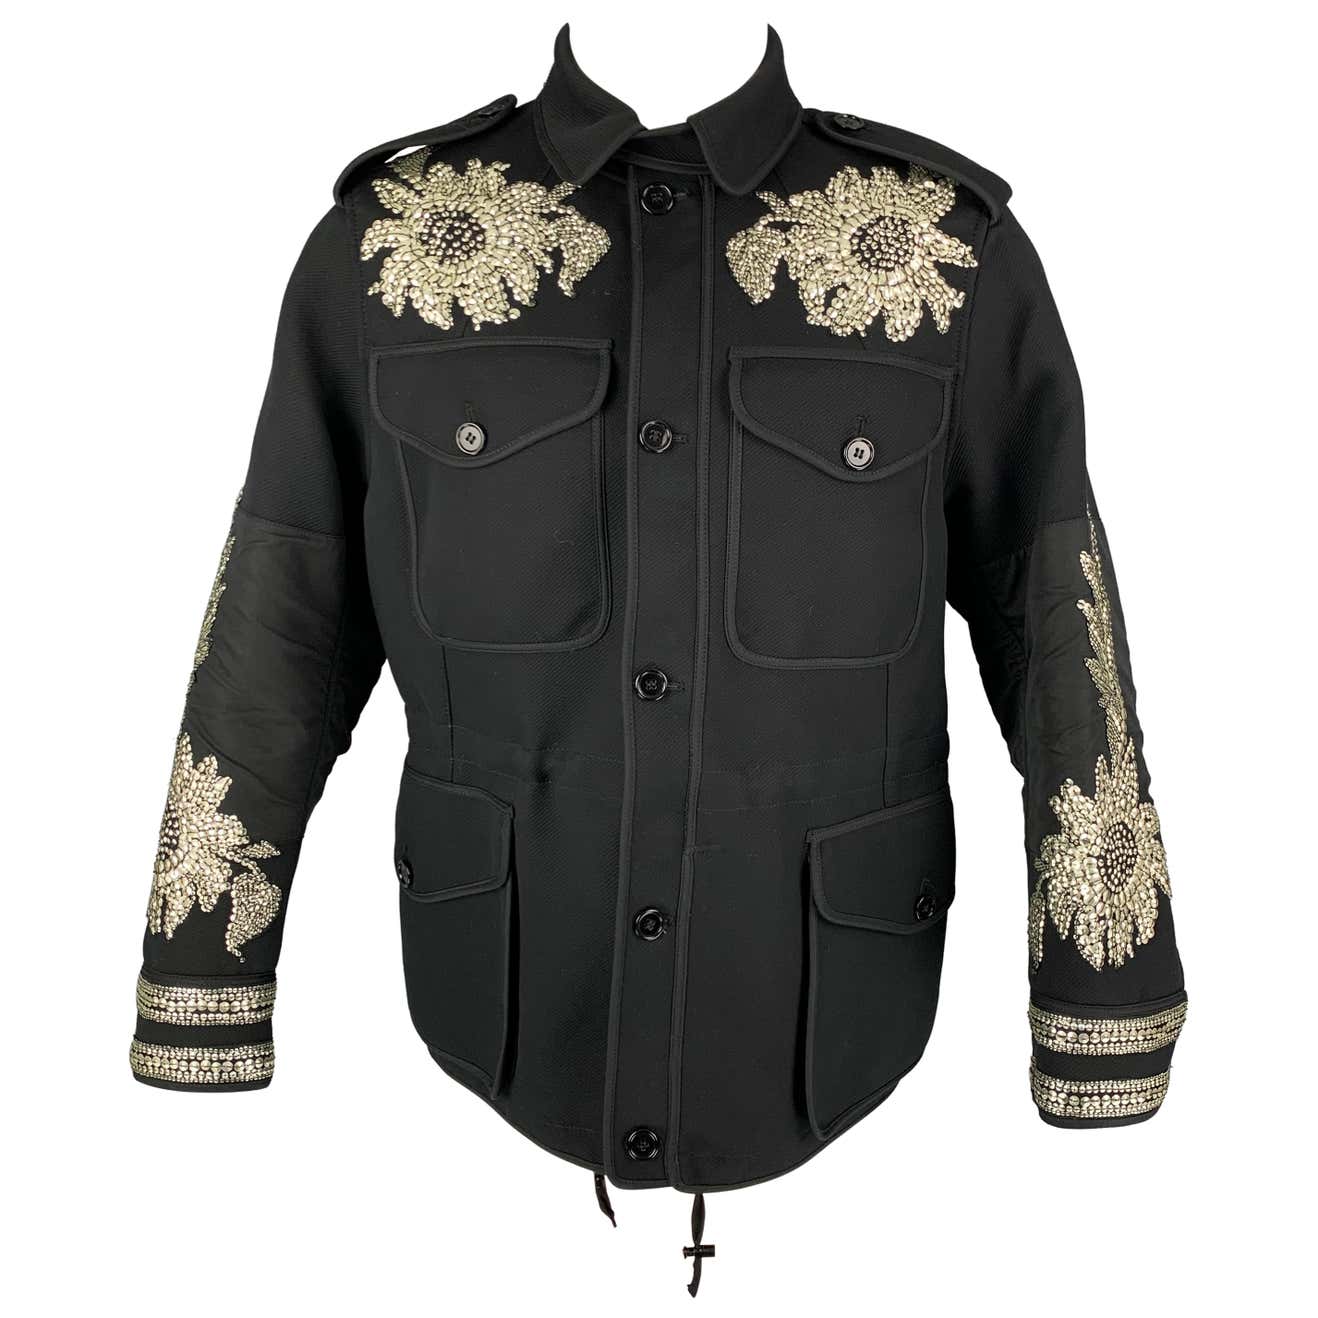 1stdibs.com | ALEXANDER MCQUEEN SS 17 Size 38 Black Silver Floral Military Regalia Coat